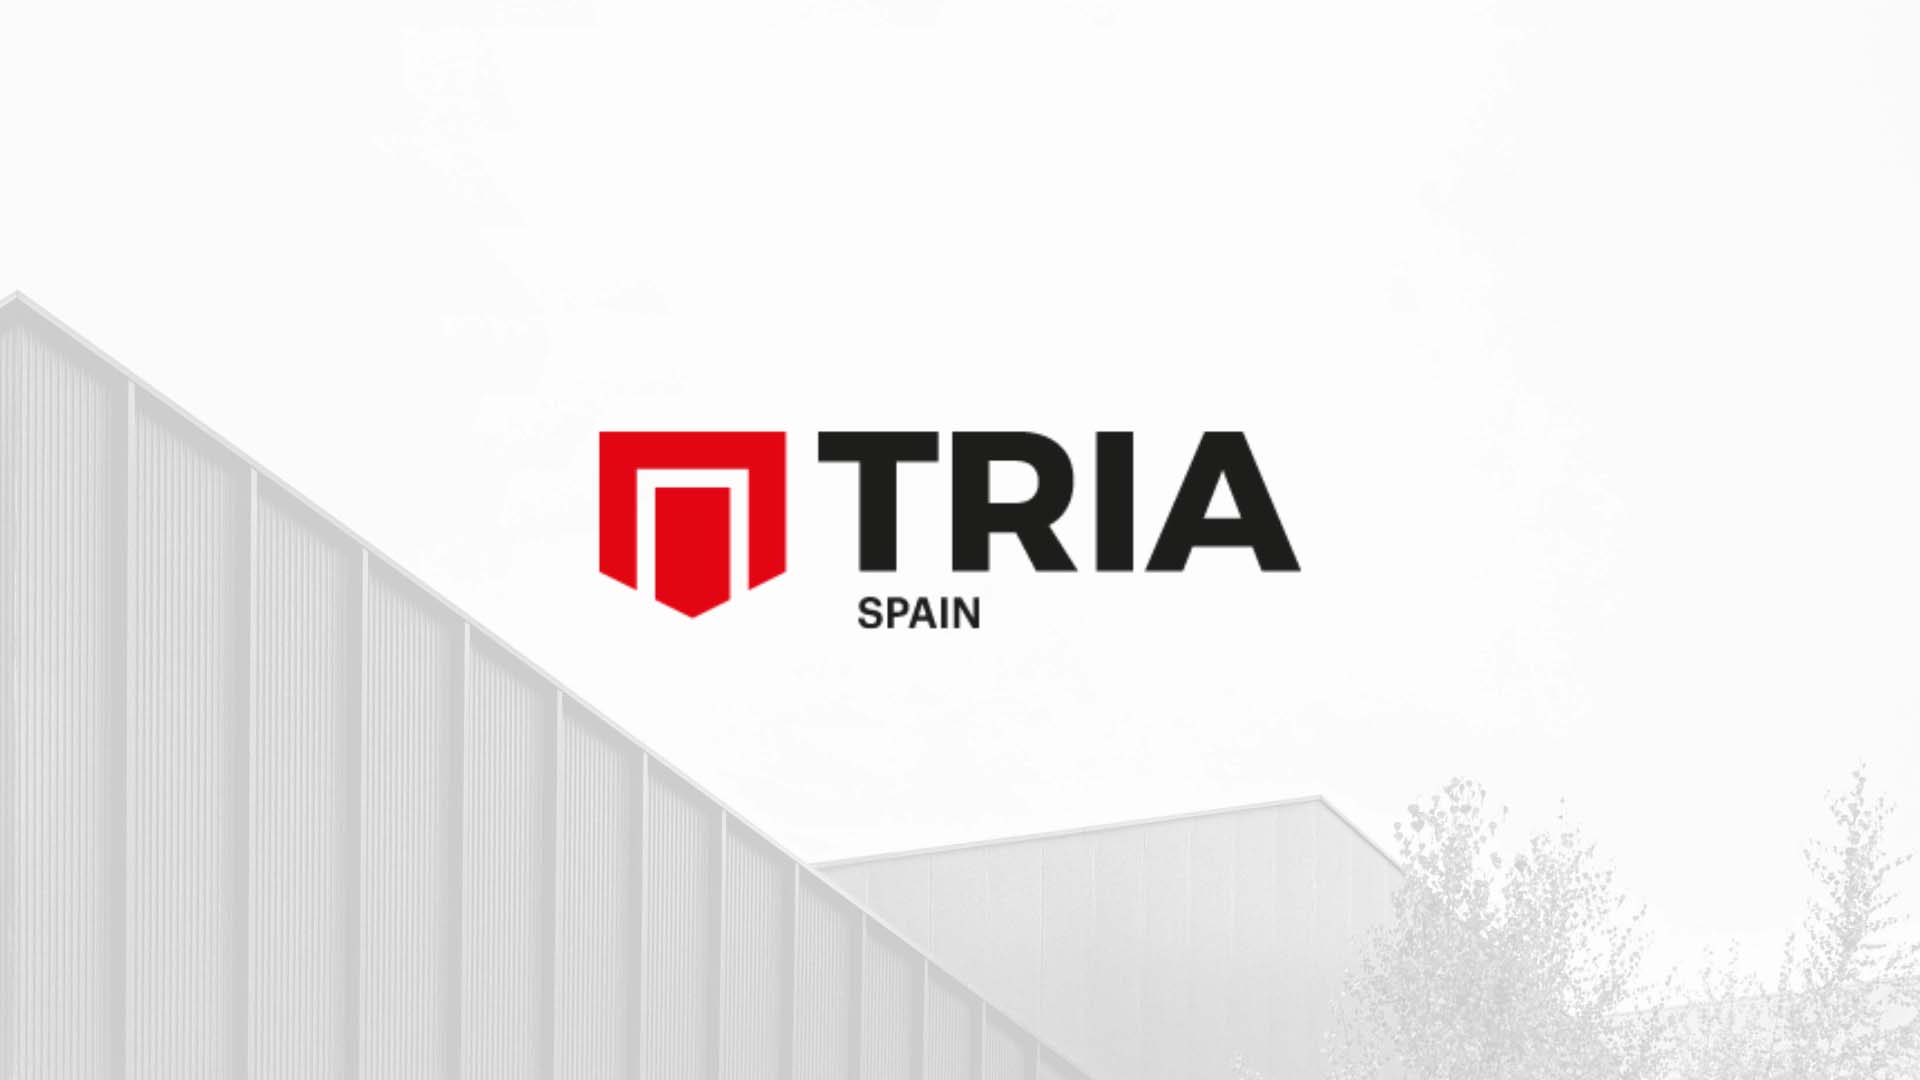 TRIA Spain launch